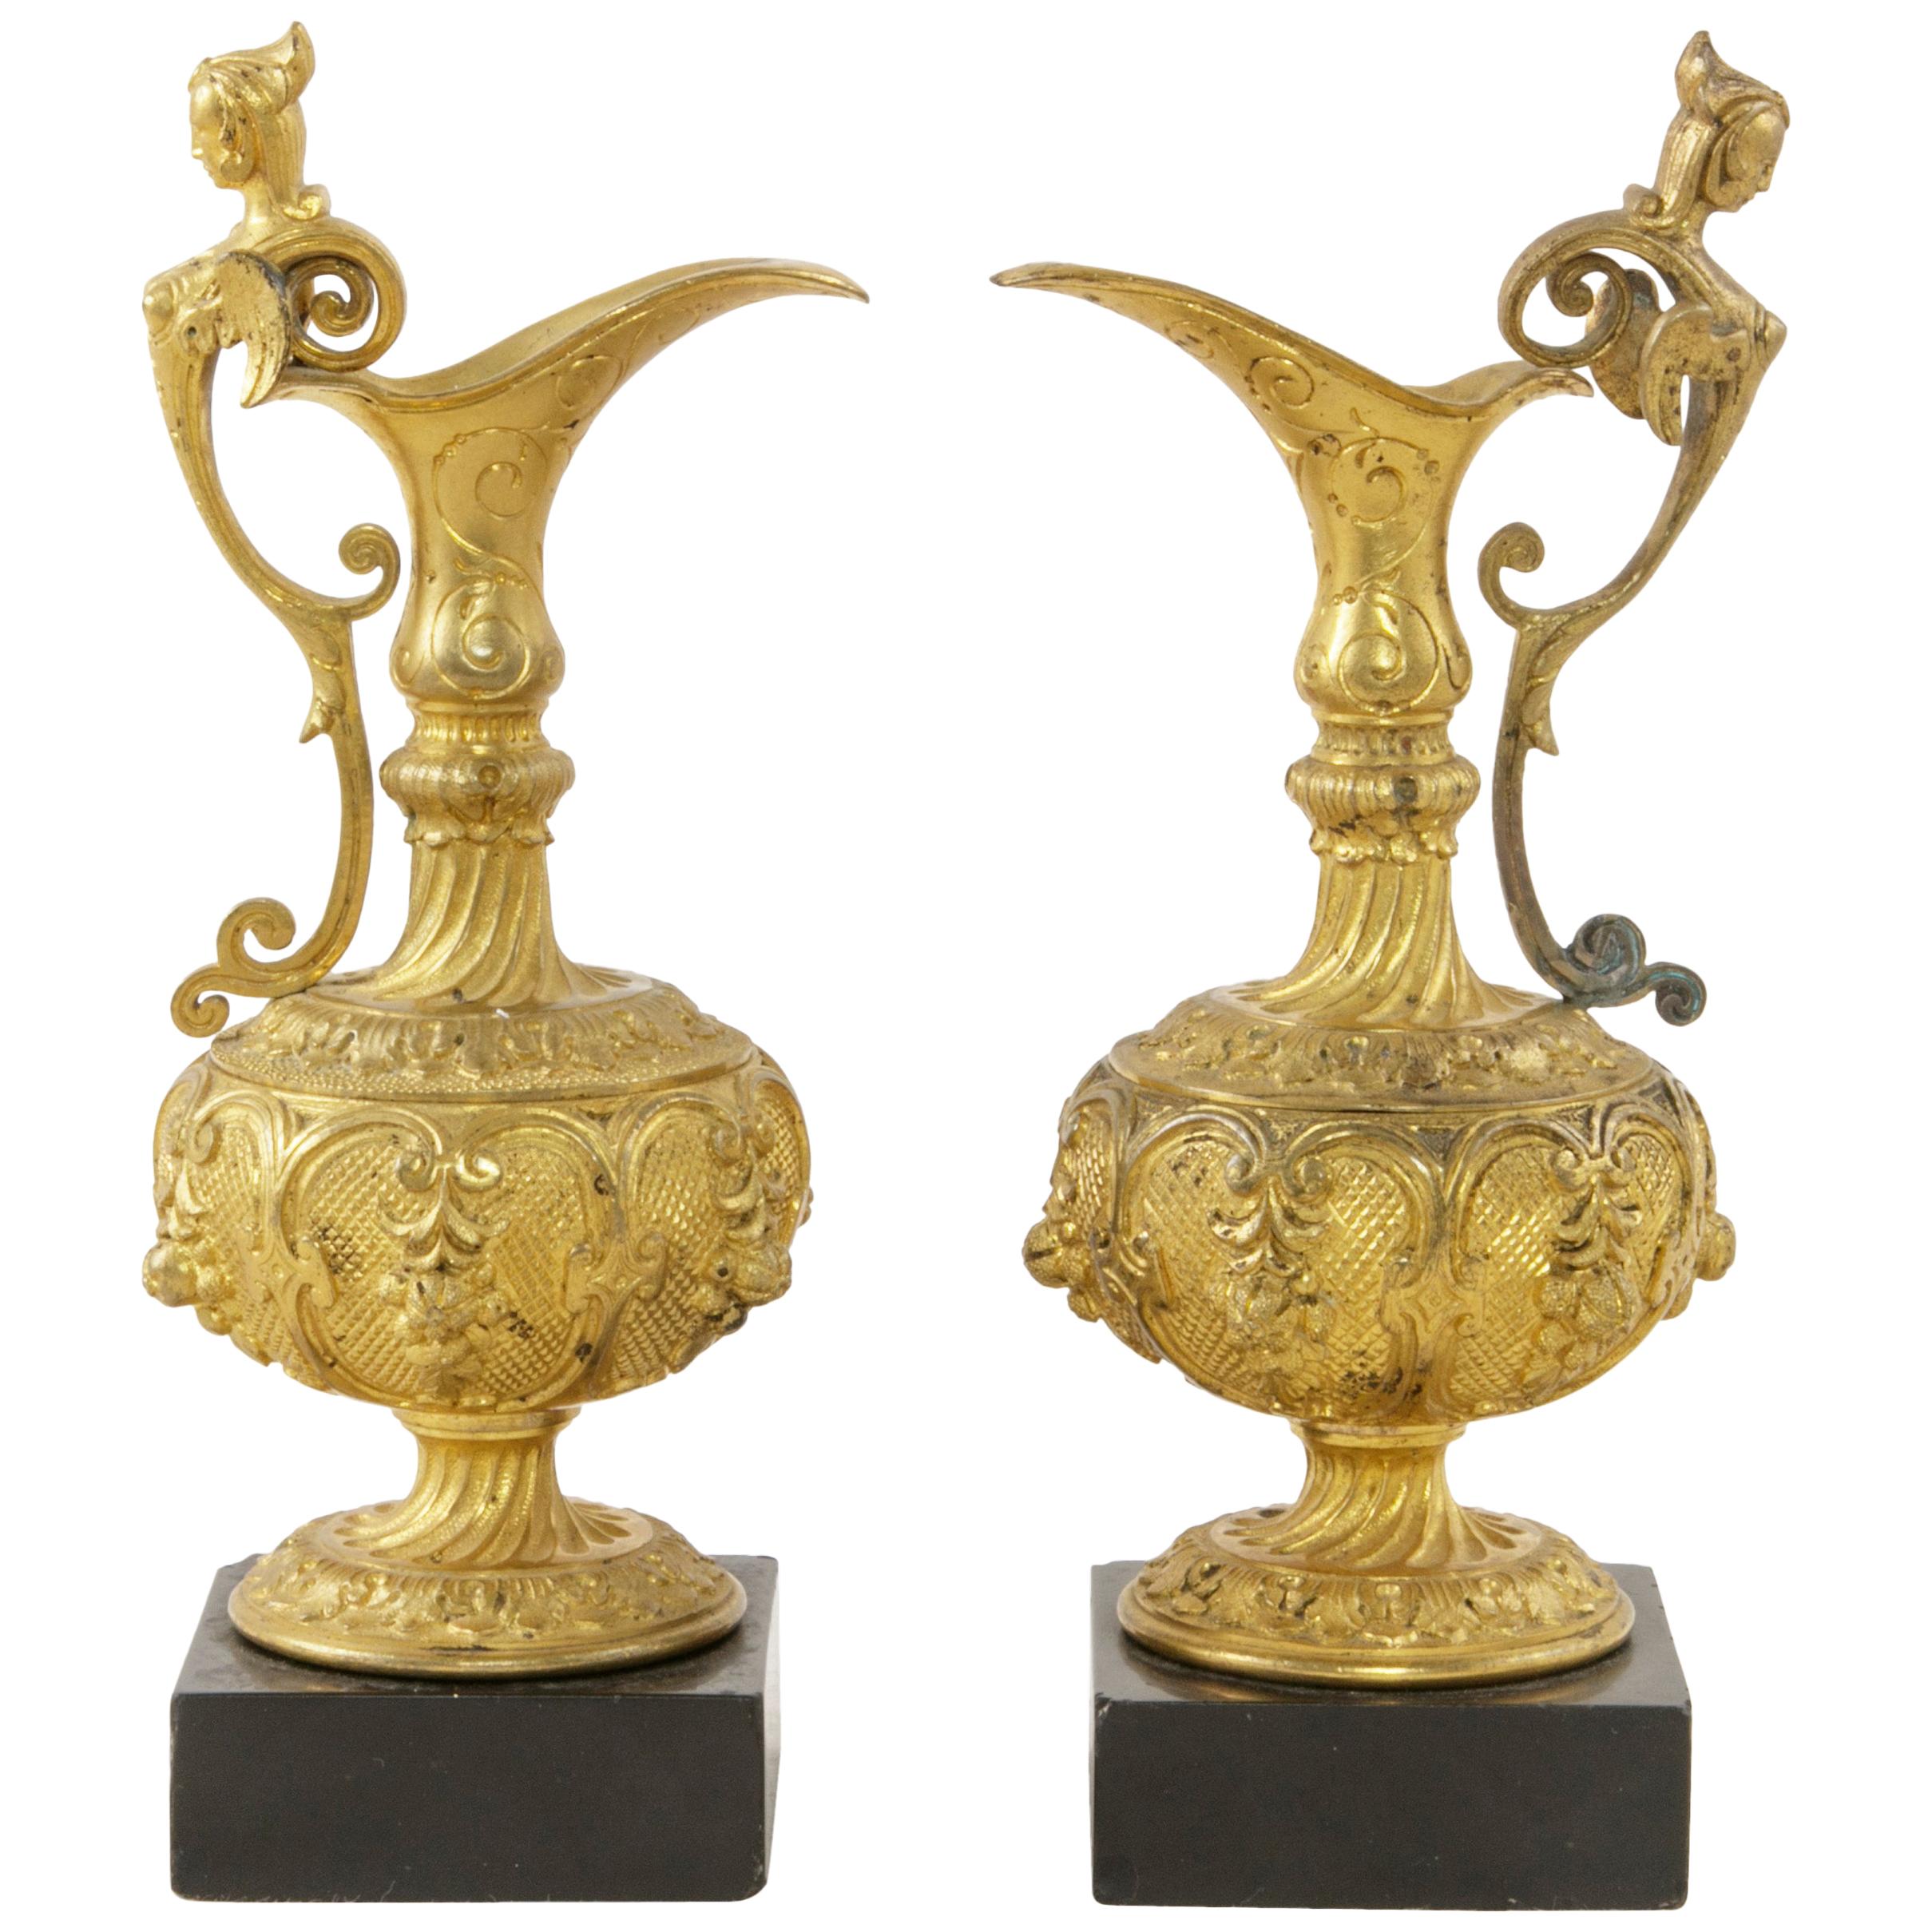 Pair of 19th Century French Napoleon III Period Gilt Bronze Altar Cruets